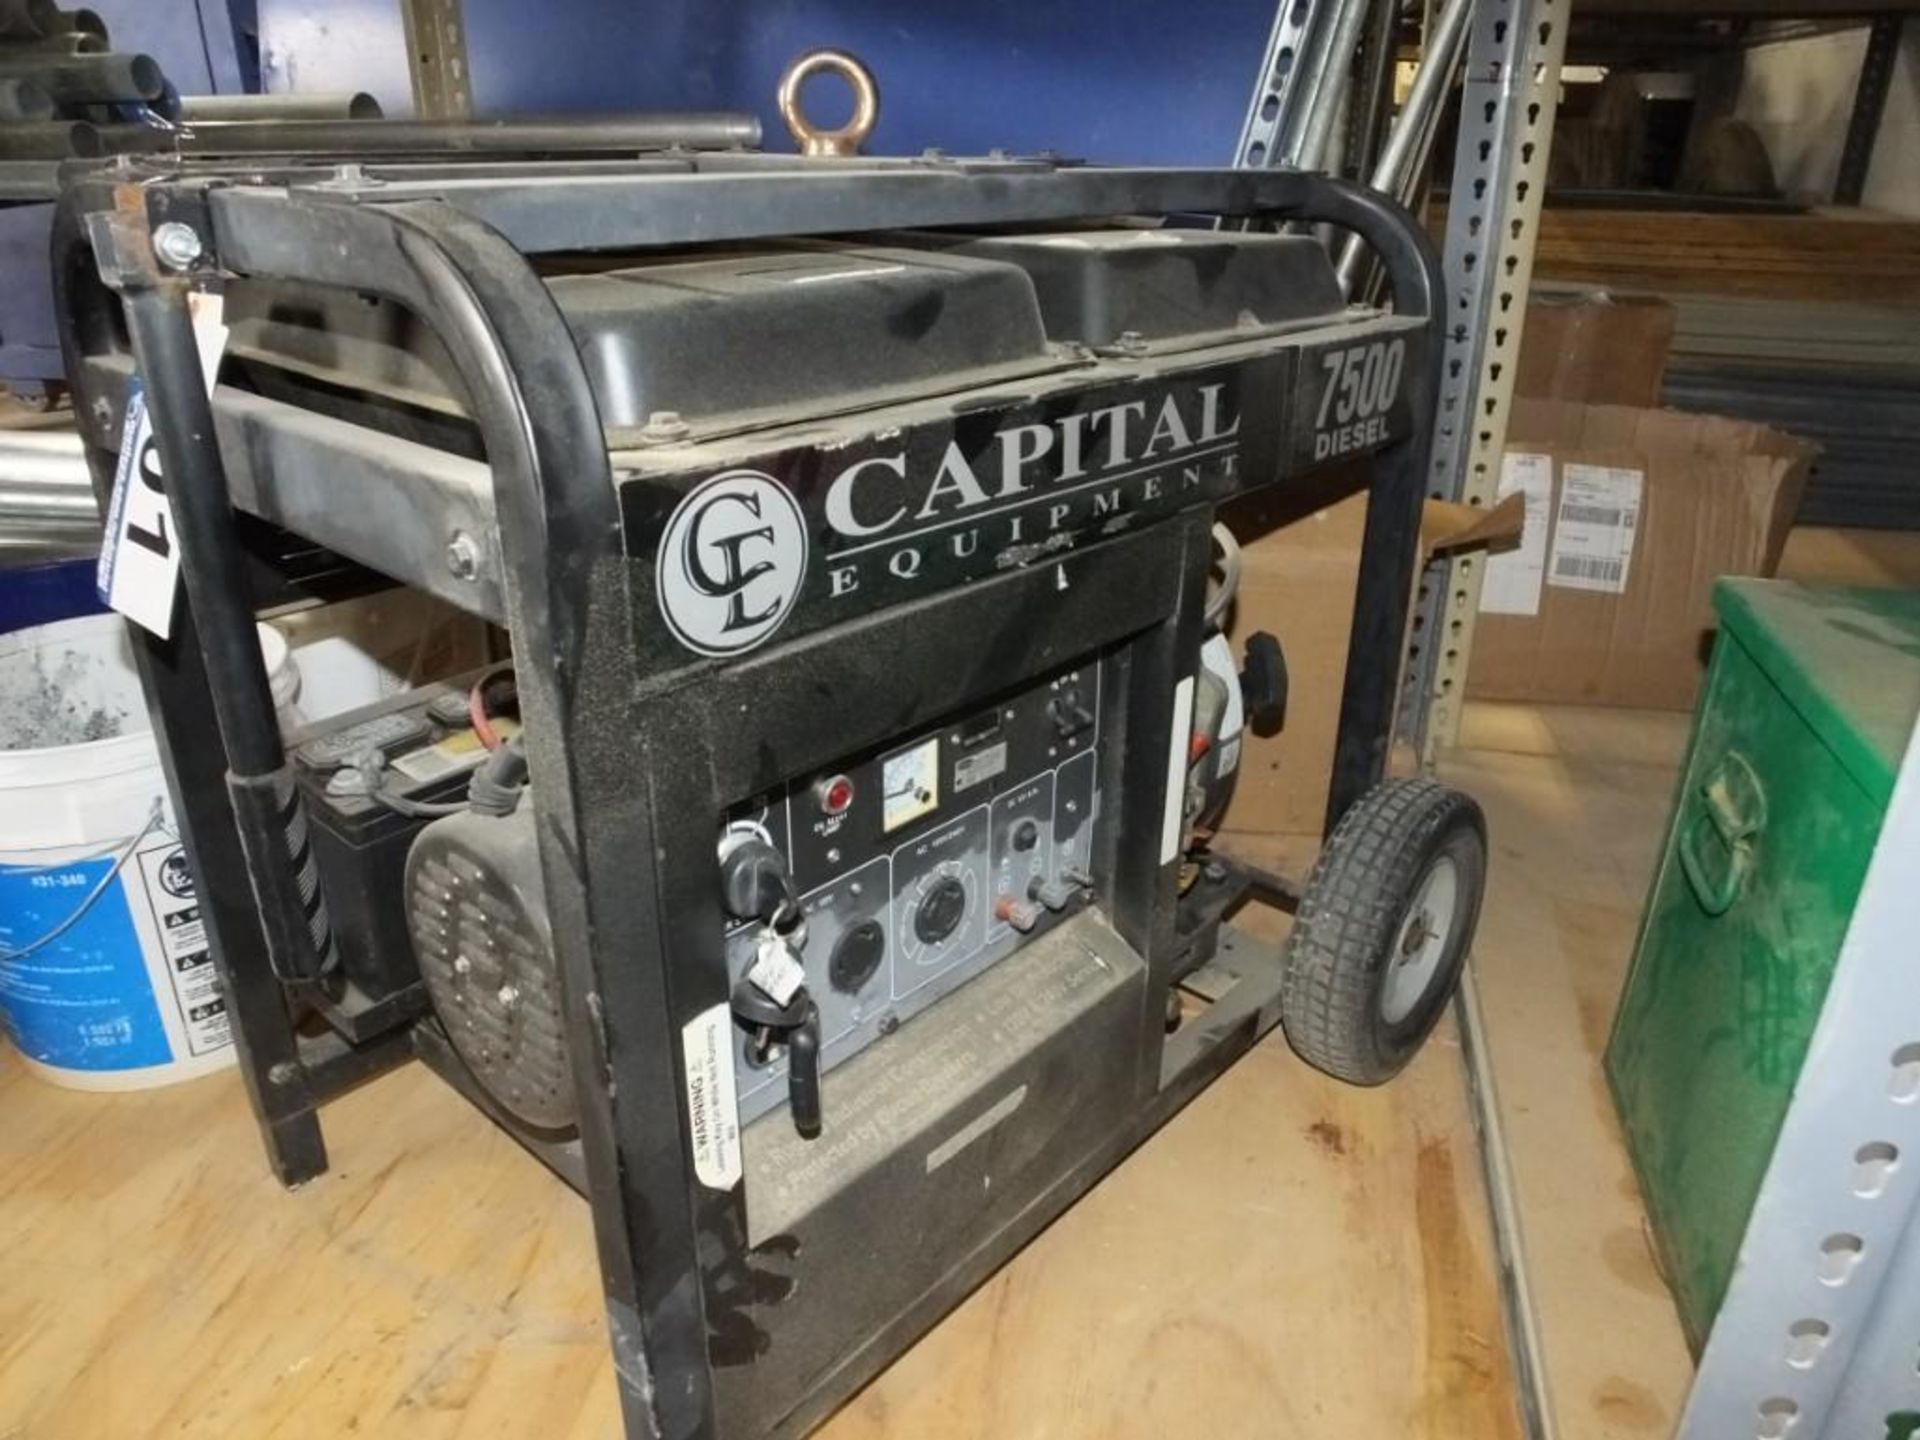 Capital Equipment 7500 Watt Diesel Generator